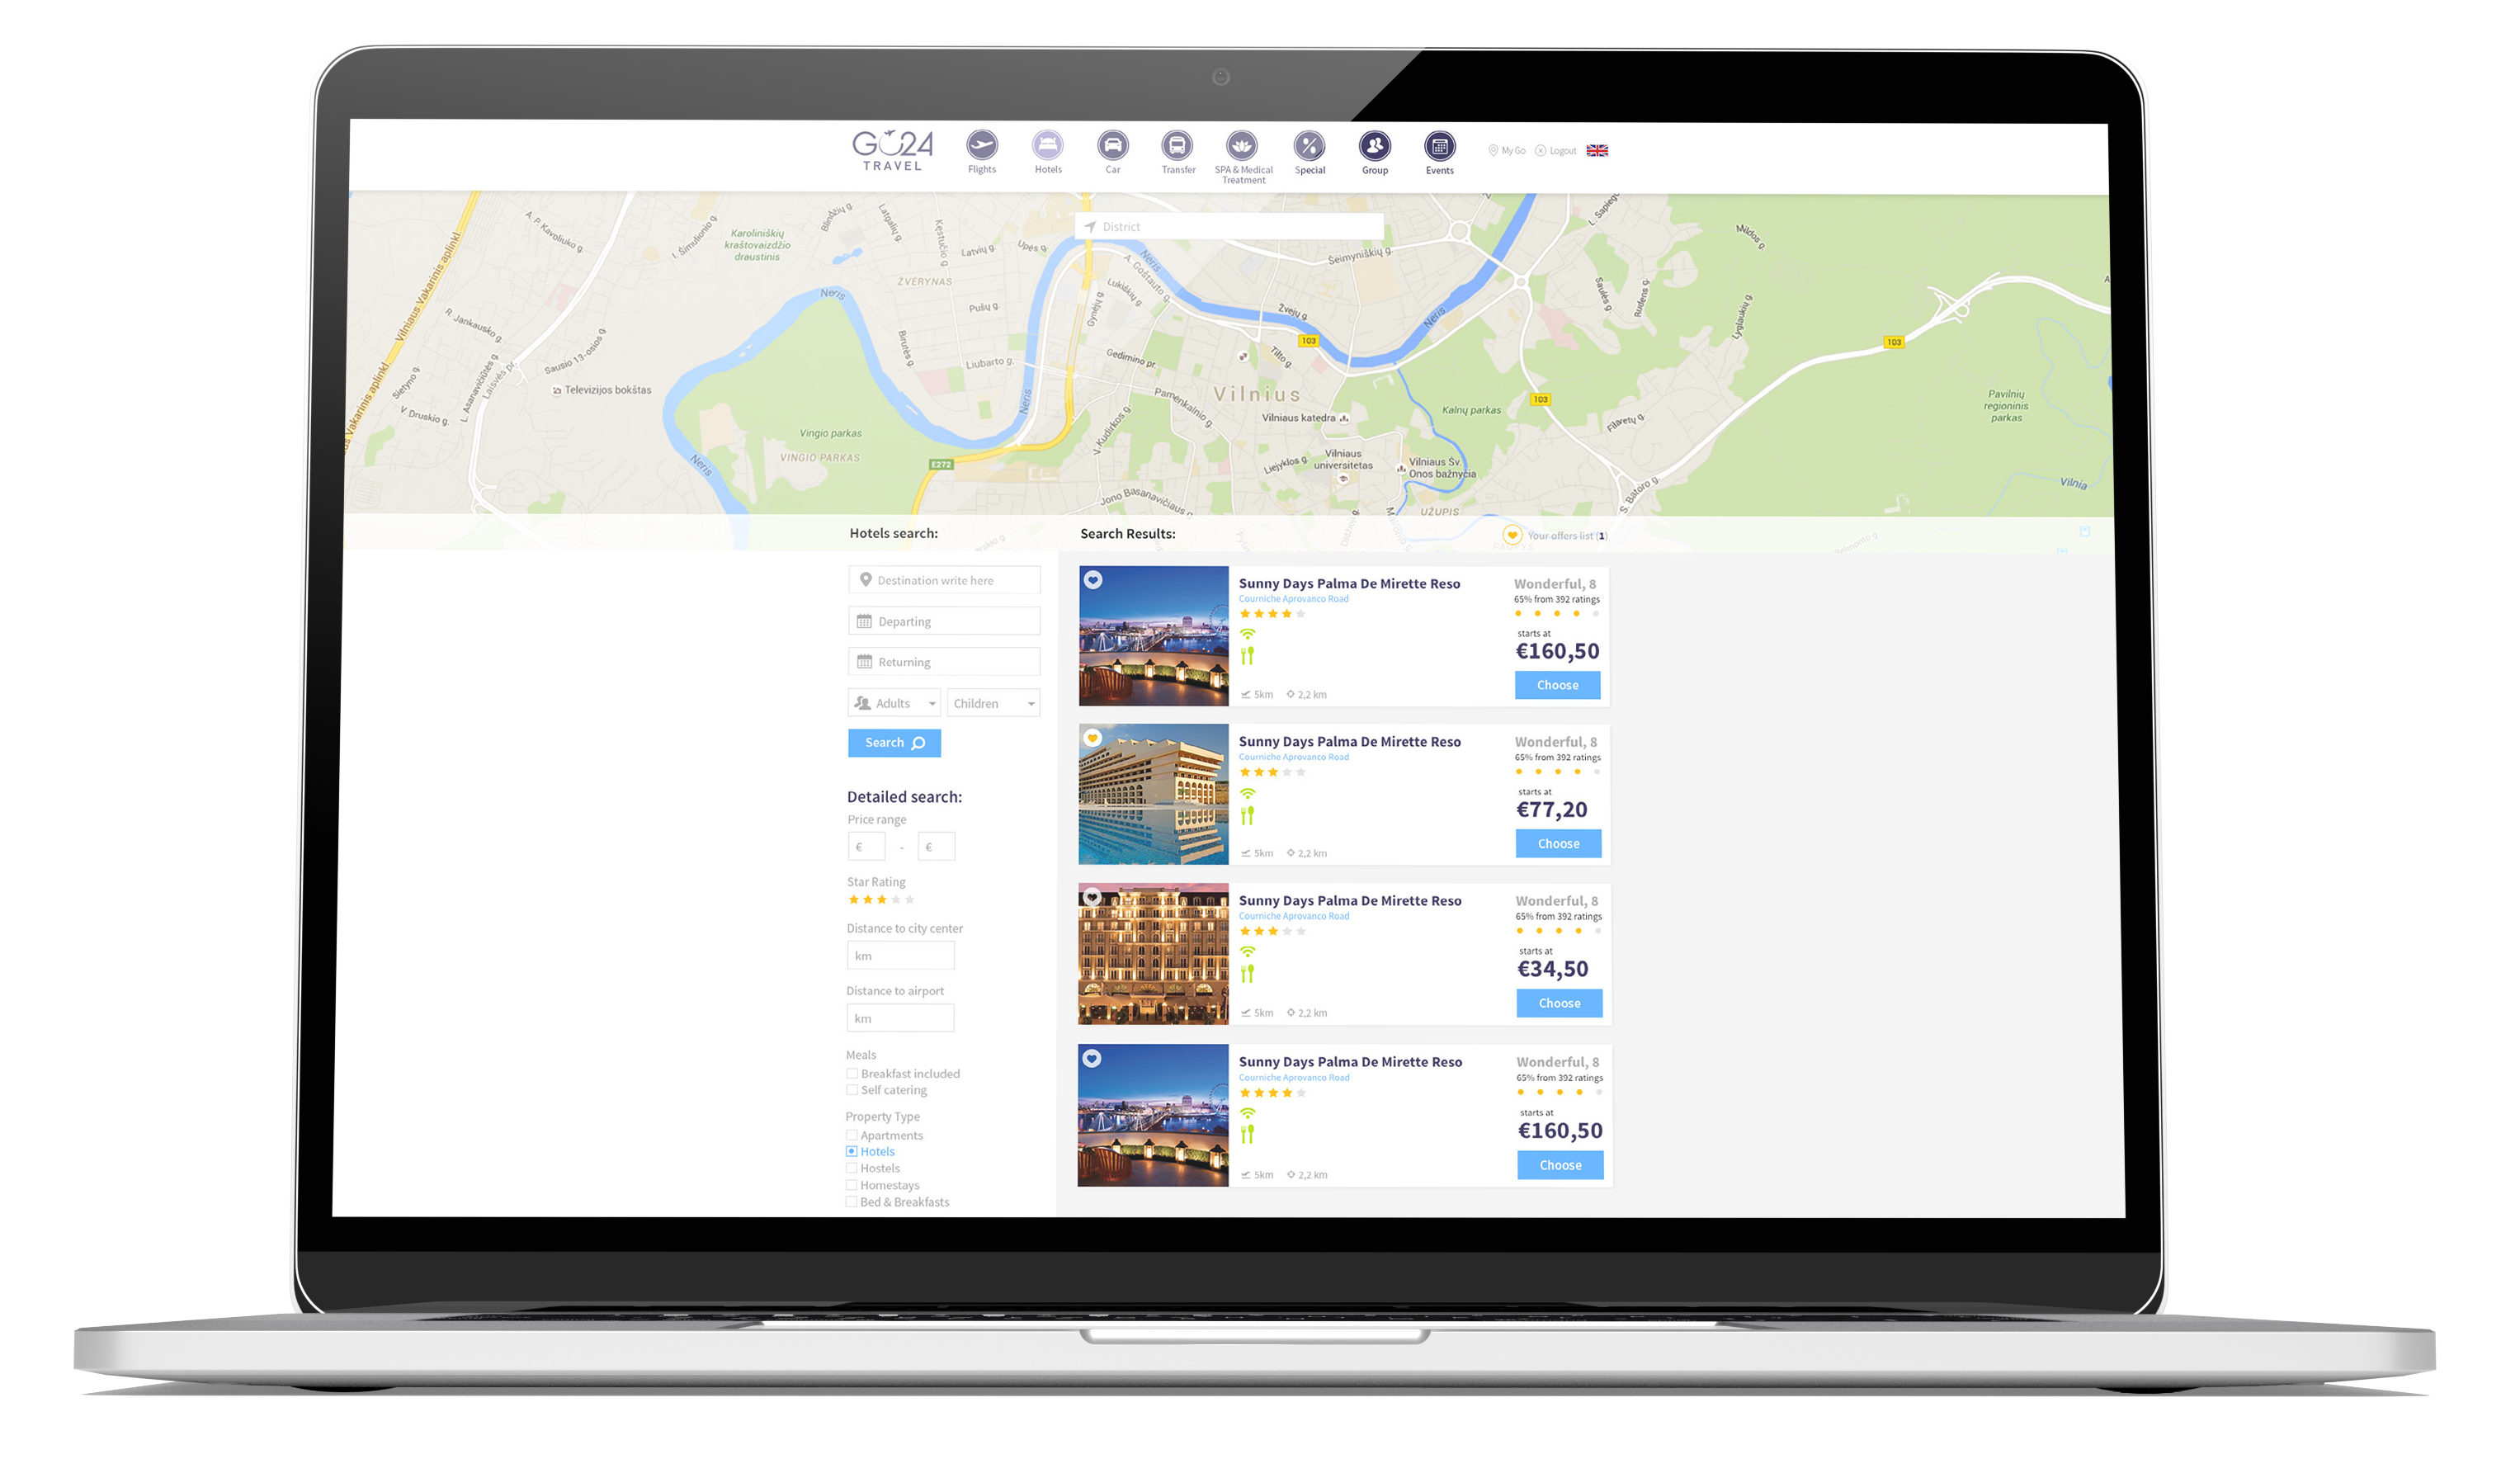 Go24 Travel web app design on a laptop screen